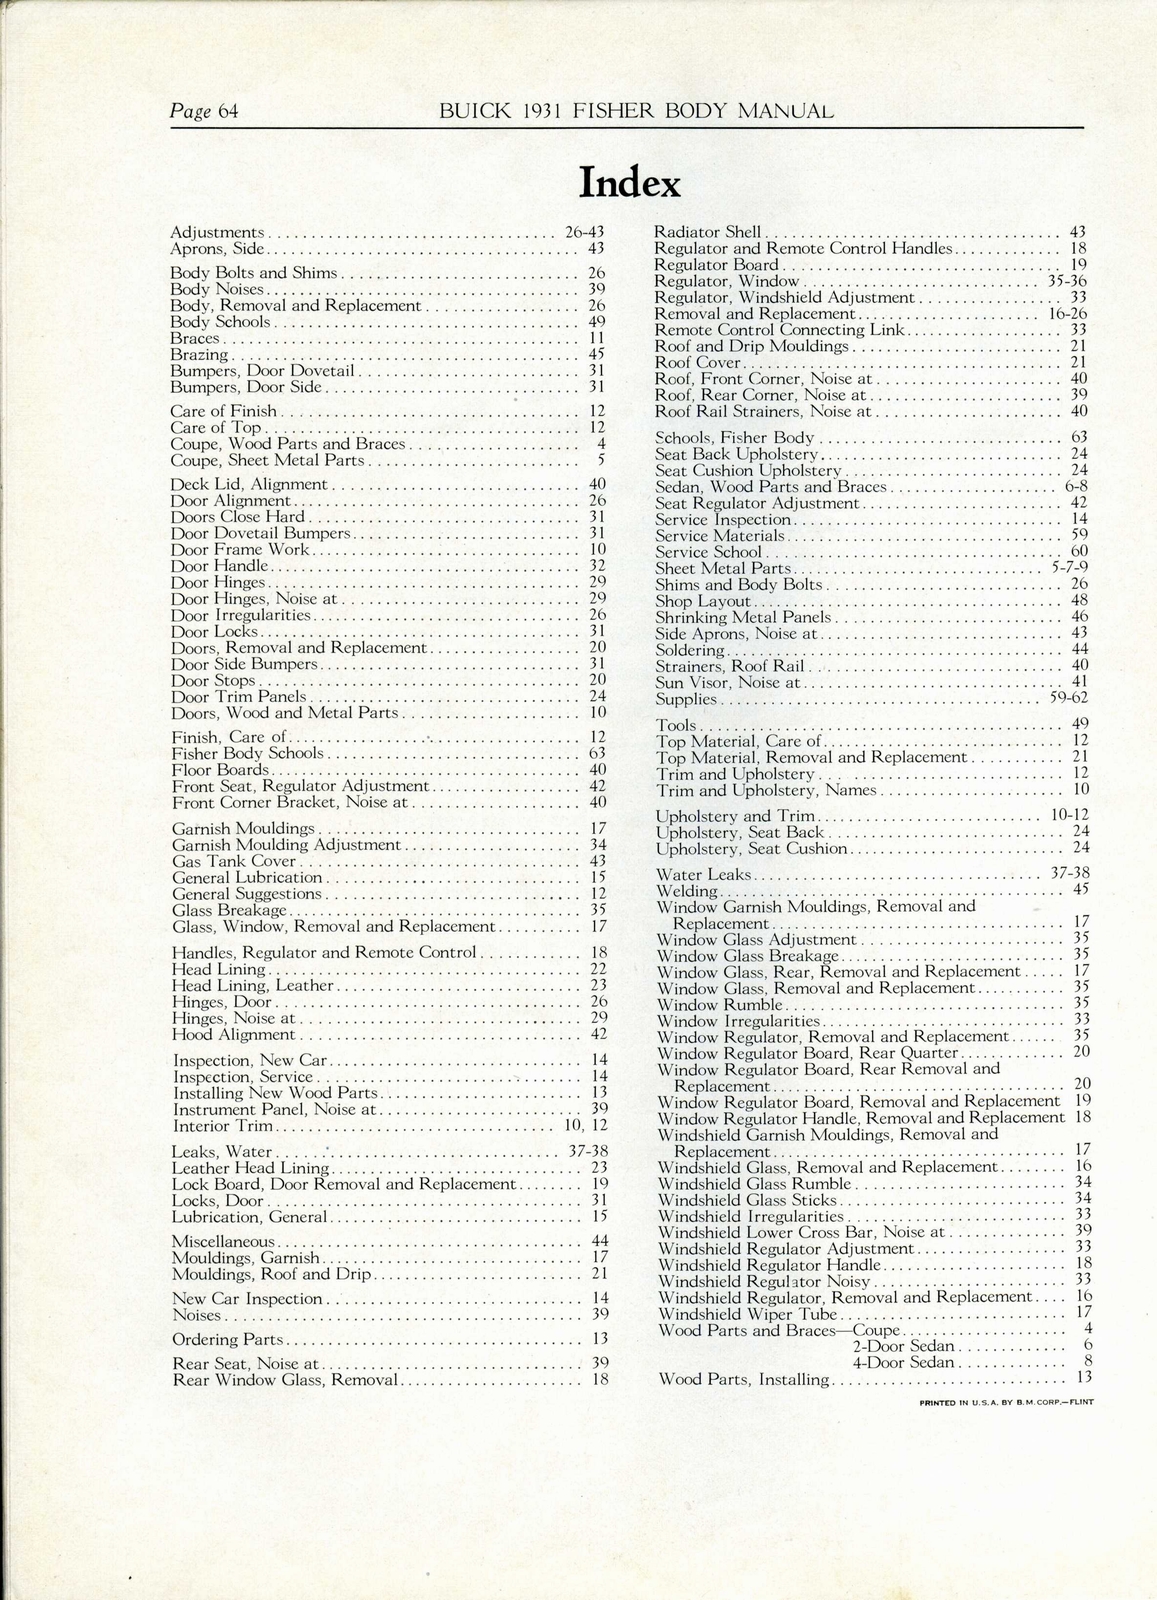 n_1931 Buick Fisher Body Manual-64.jpg